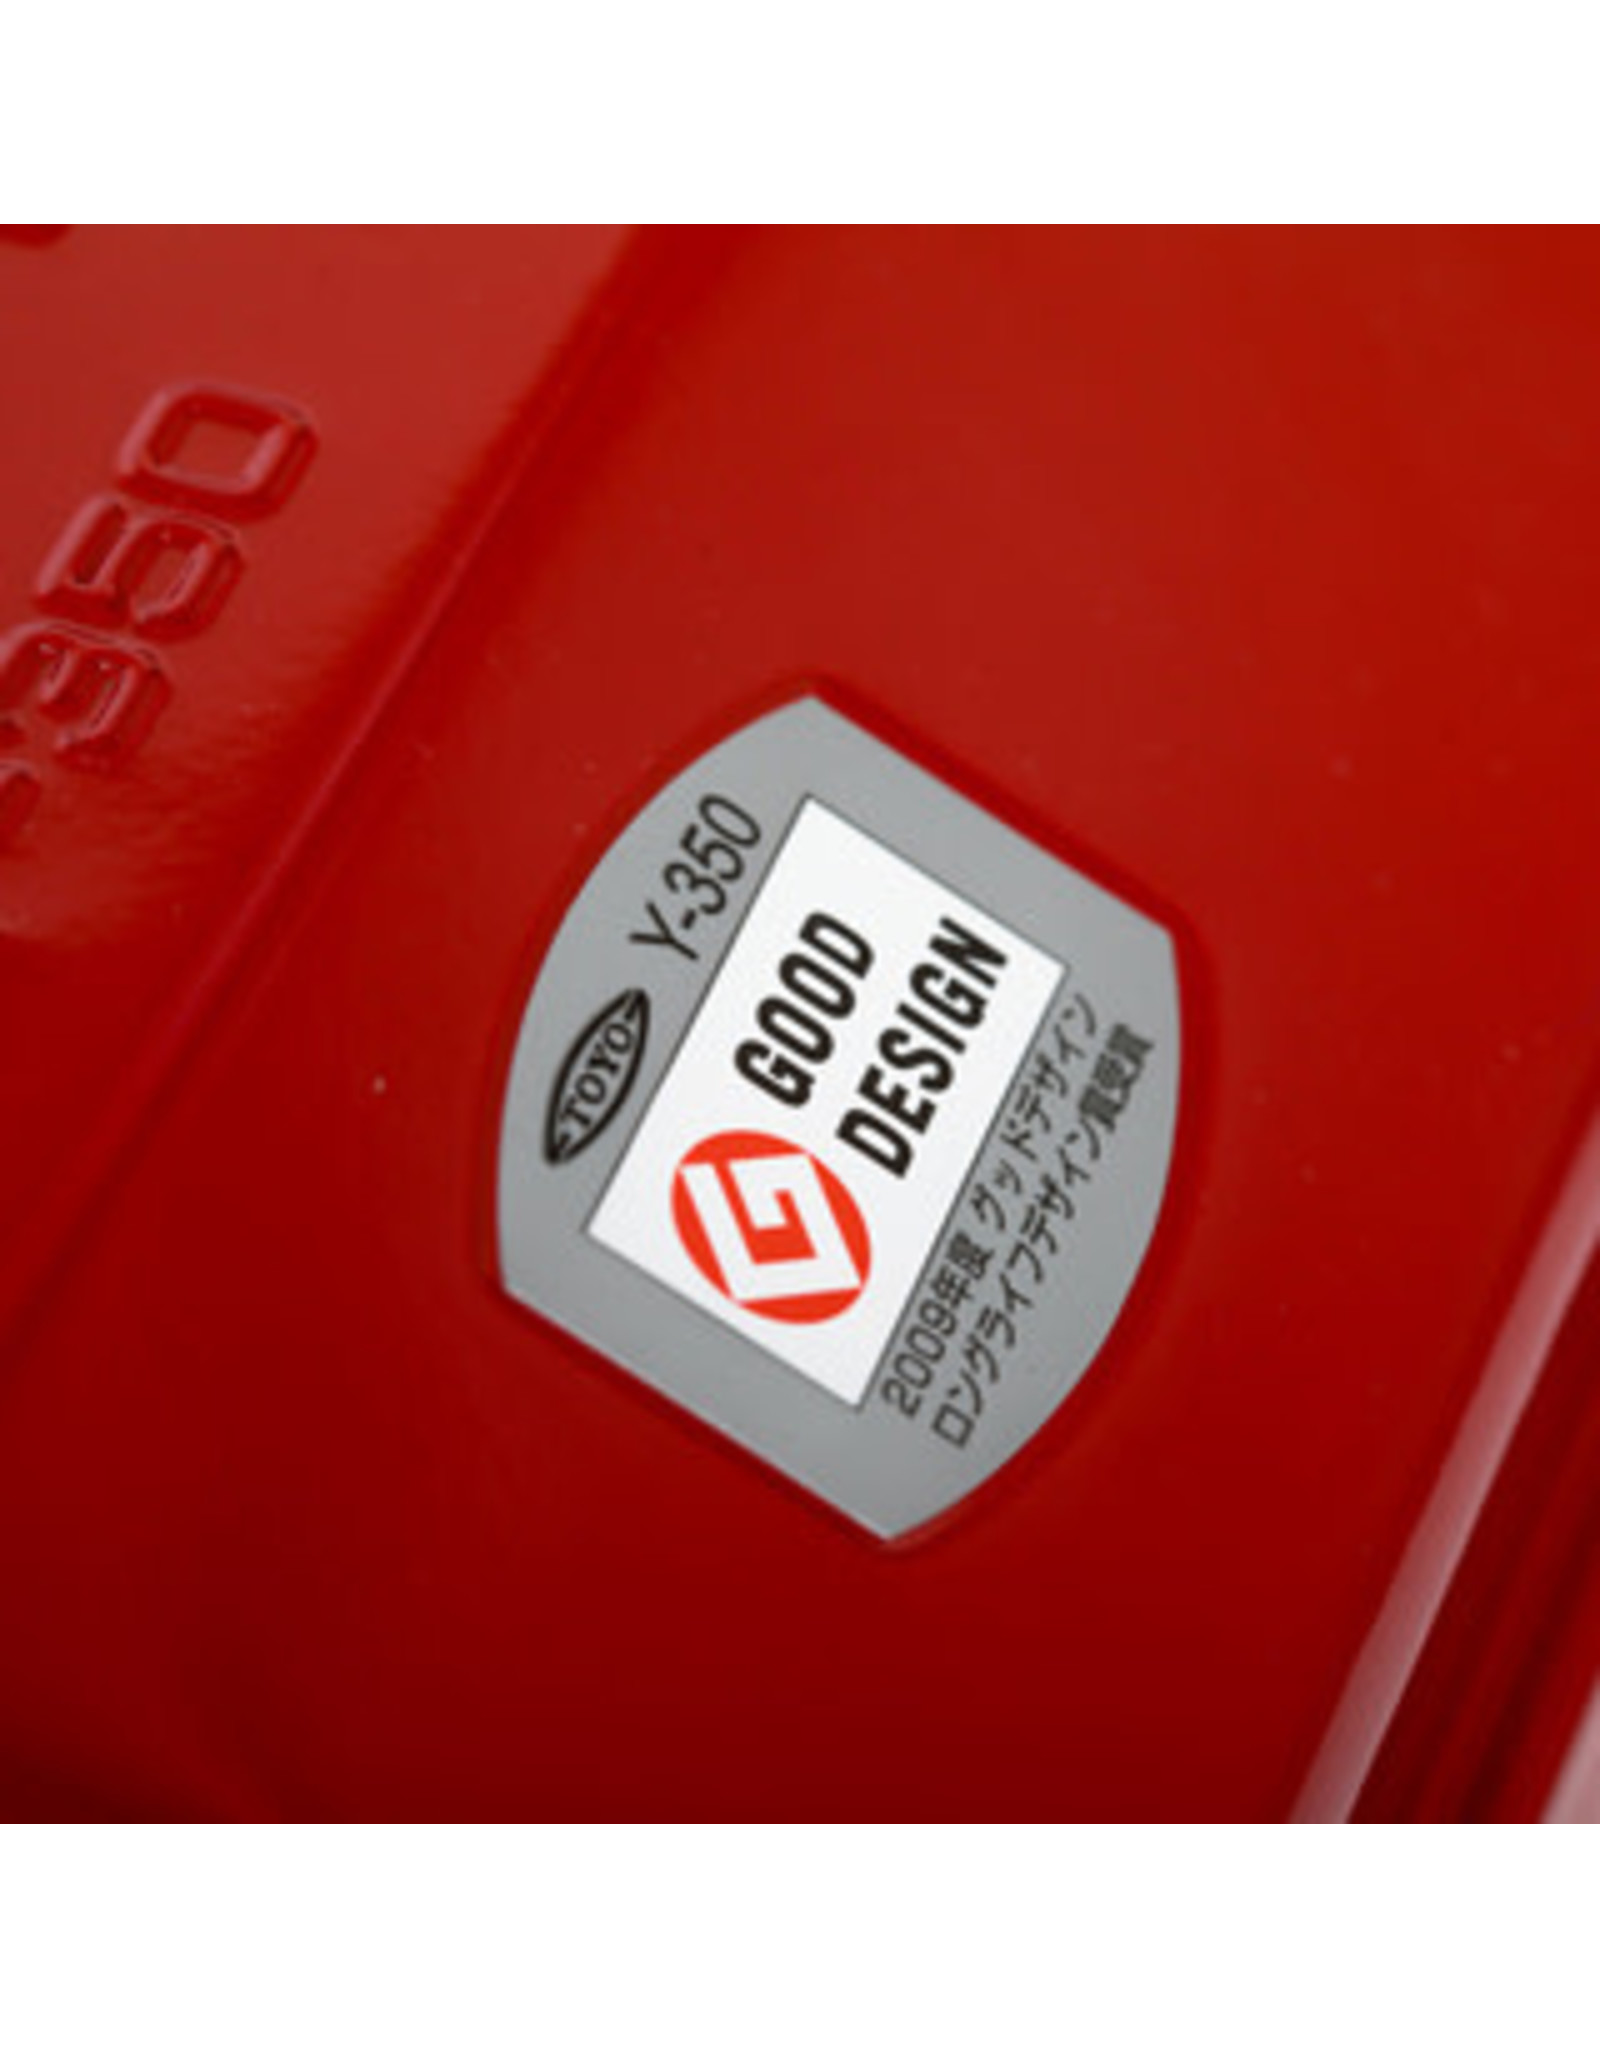 Toyo steel Tool box Y-350 rood 36 x 11 x 15 cm